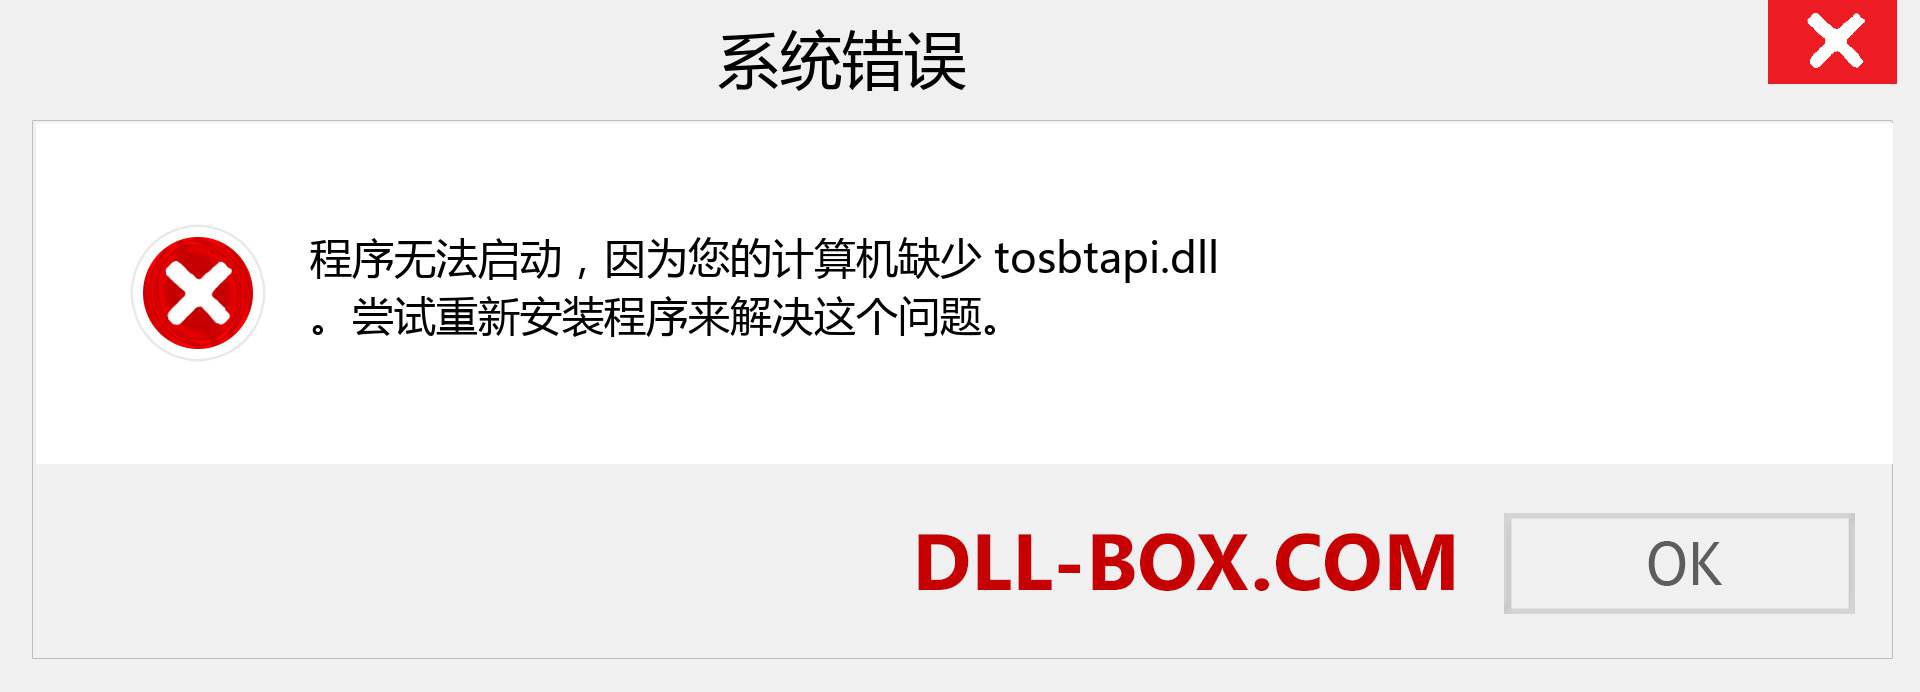 tosbtapi.dll 文件丢失？。 适用于 Windows 7、8、10 的下载 - 修复 Windows、照片、图像上的 tosbtapi dll 丢失错误